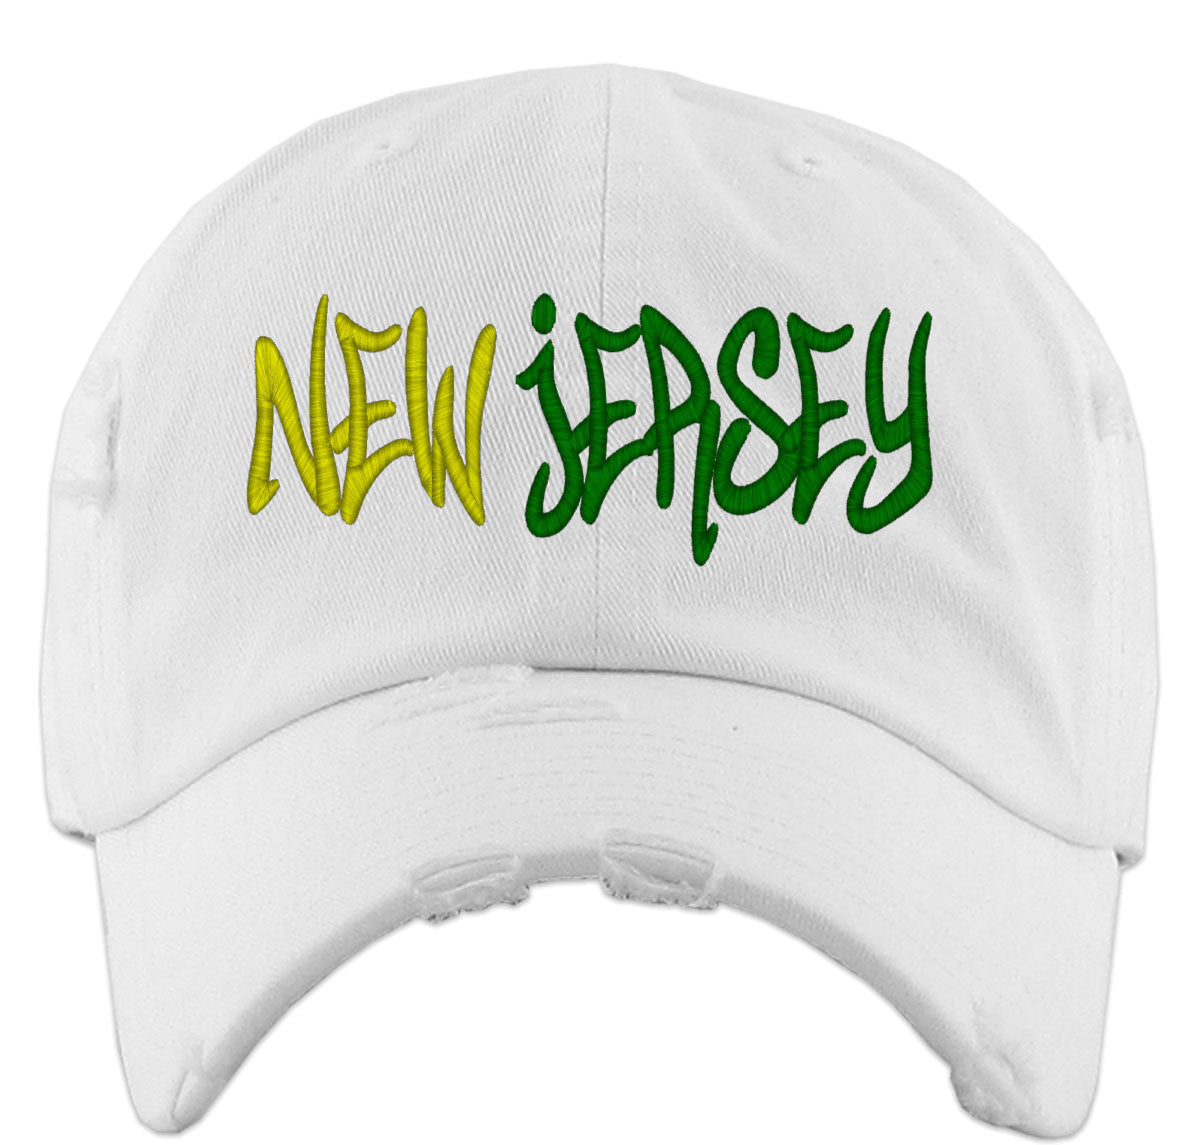 New Jersey Graffiti Vintage Baseball Cap